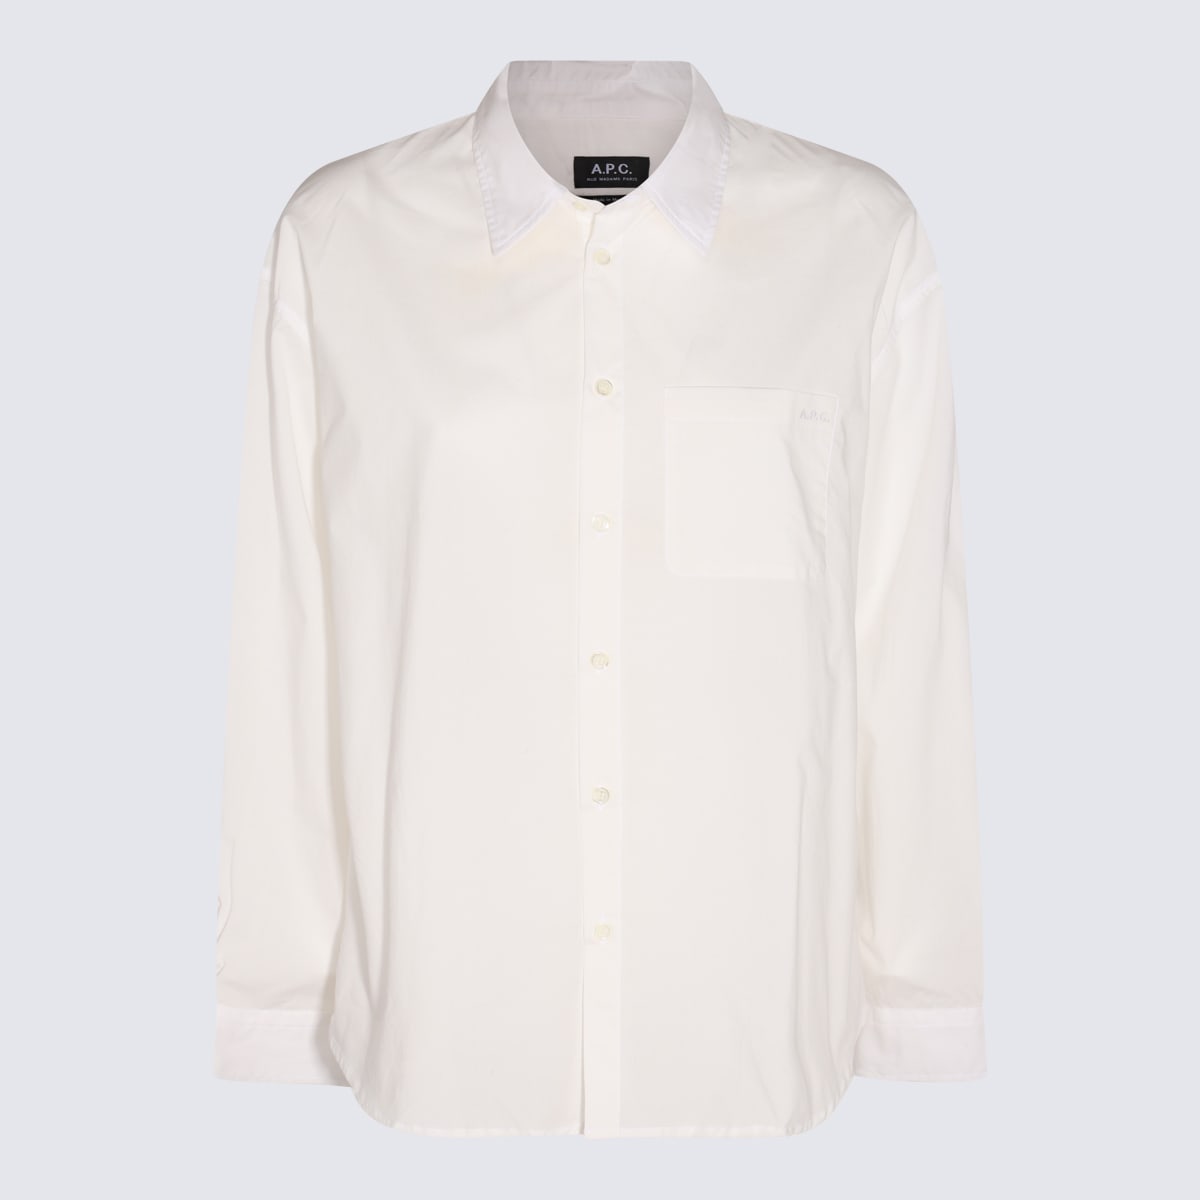 Apc White Cotton Shirt